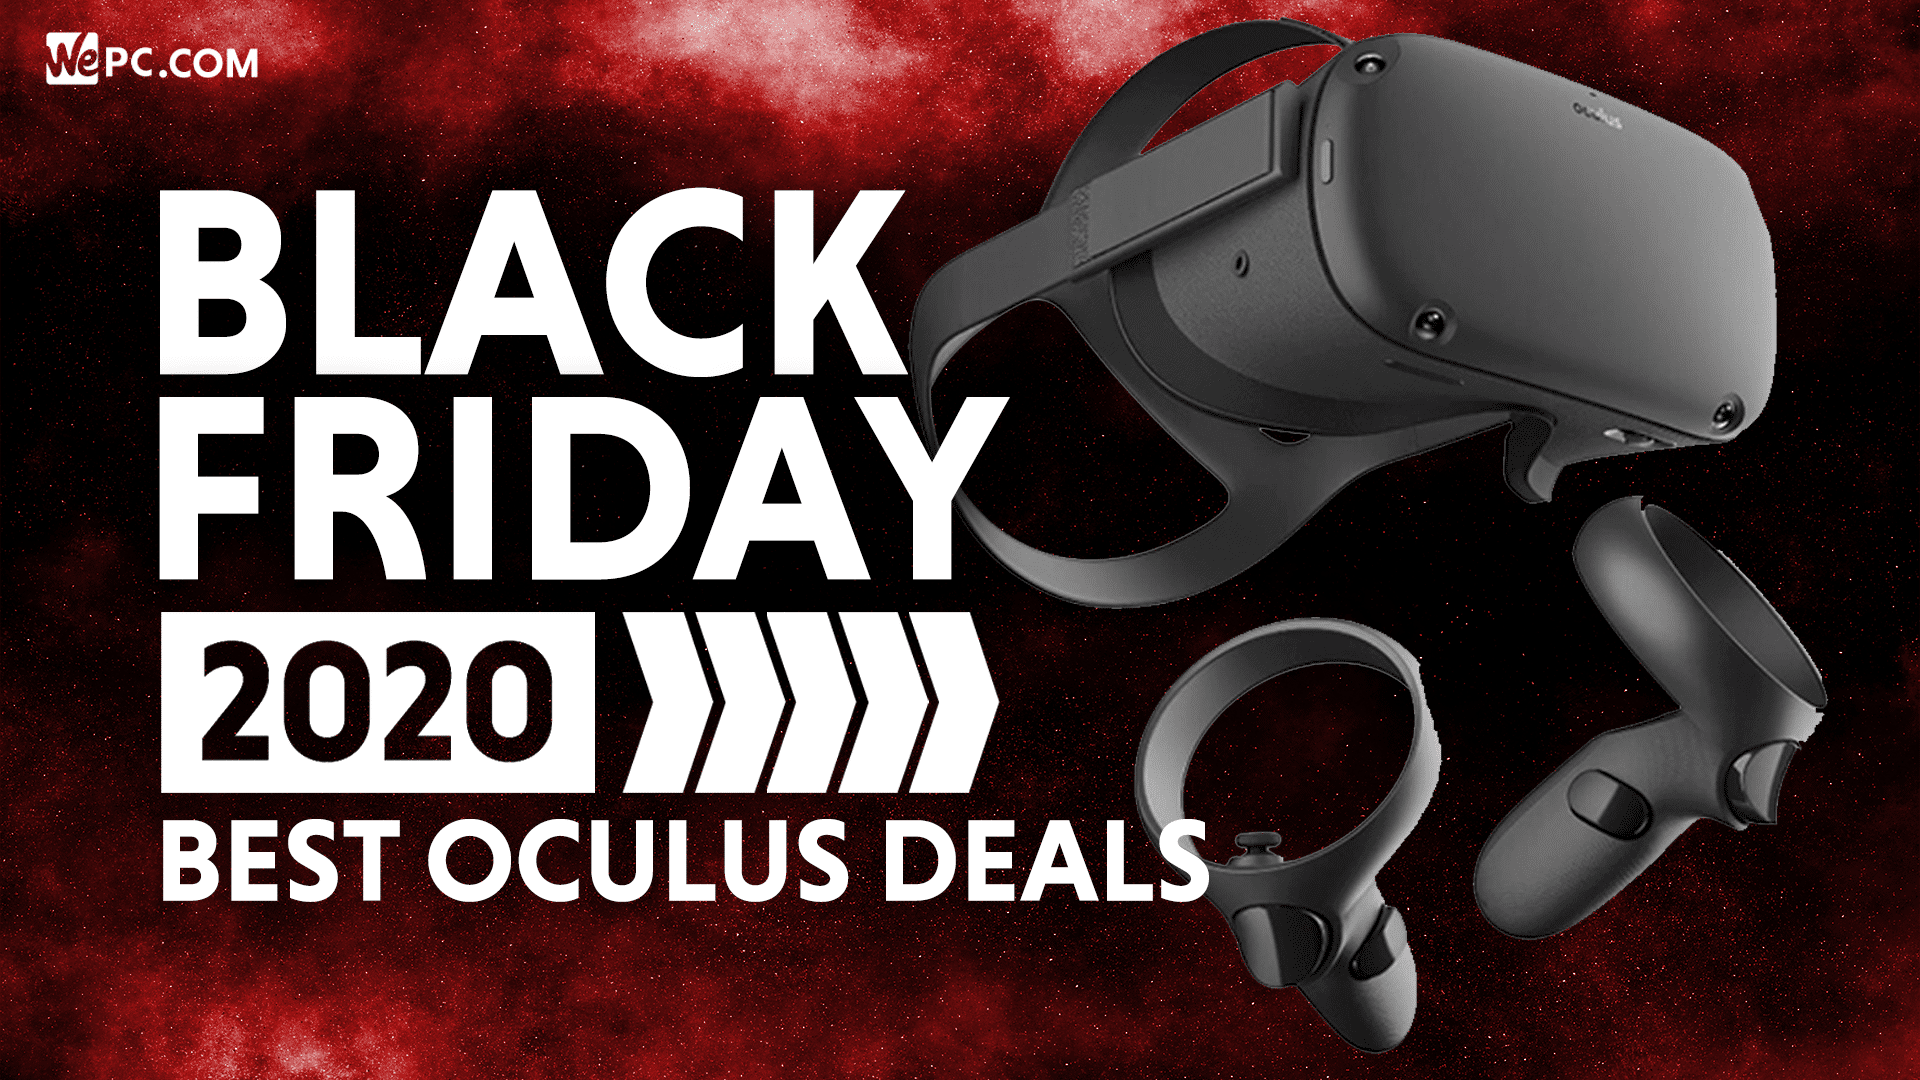 oculus quest amazon black friday